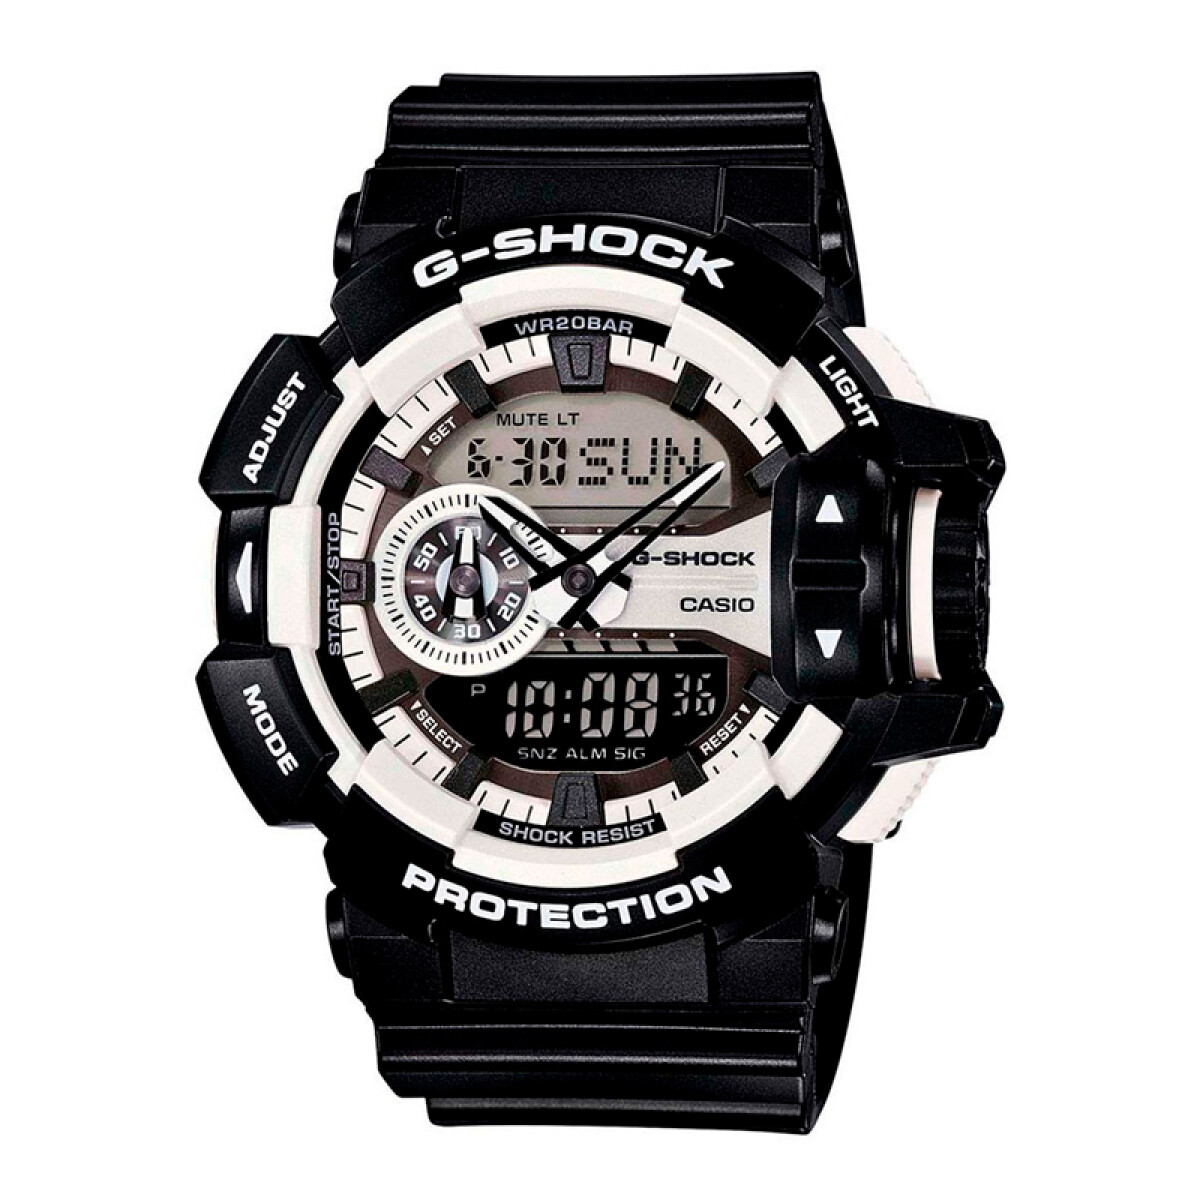 Reloj G-Shock deportivo - negro y blanco 